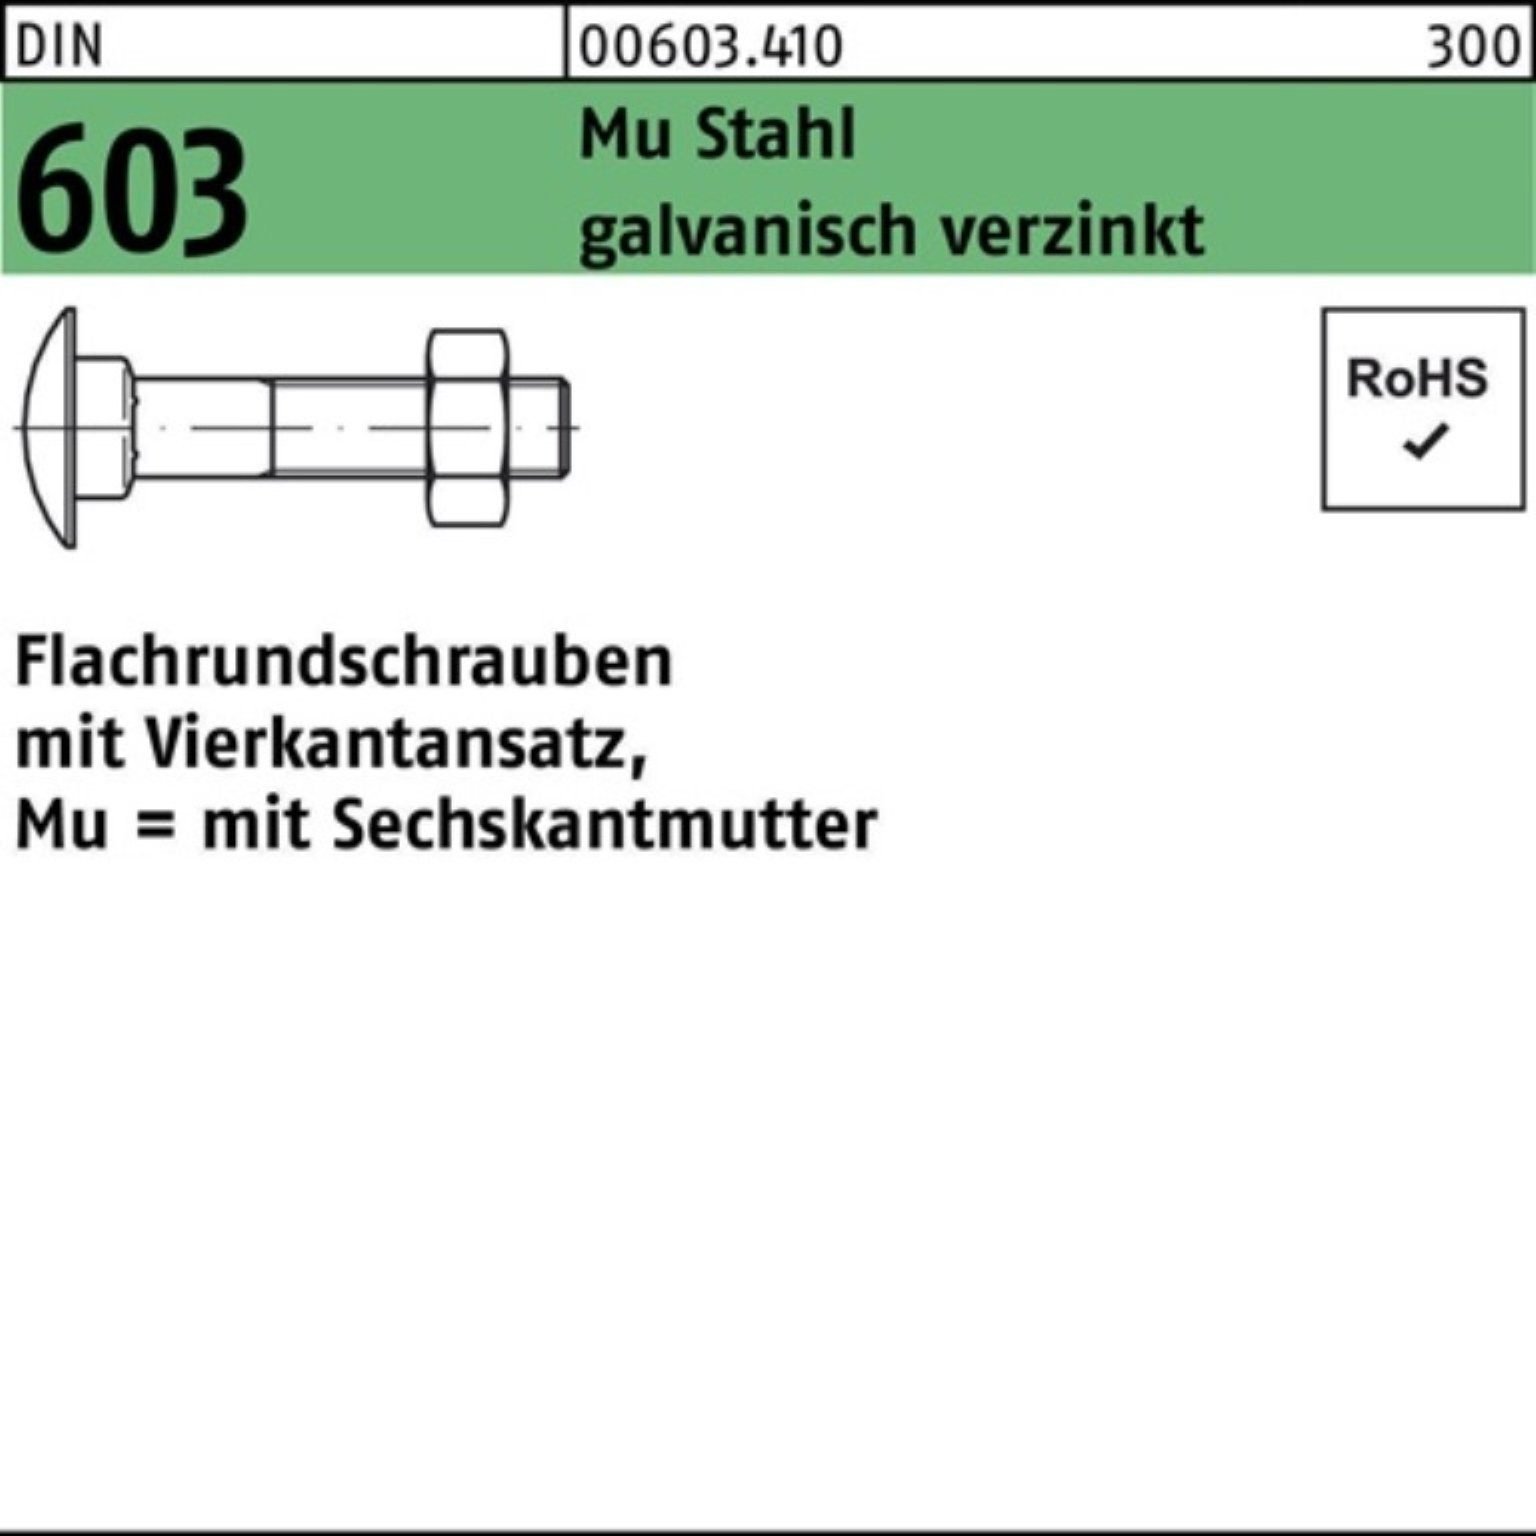 DIN Pack Flachrundschraube Vierkantansatz/6-ktmutter Schraube 100er 603 Reyher M6x150